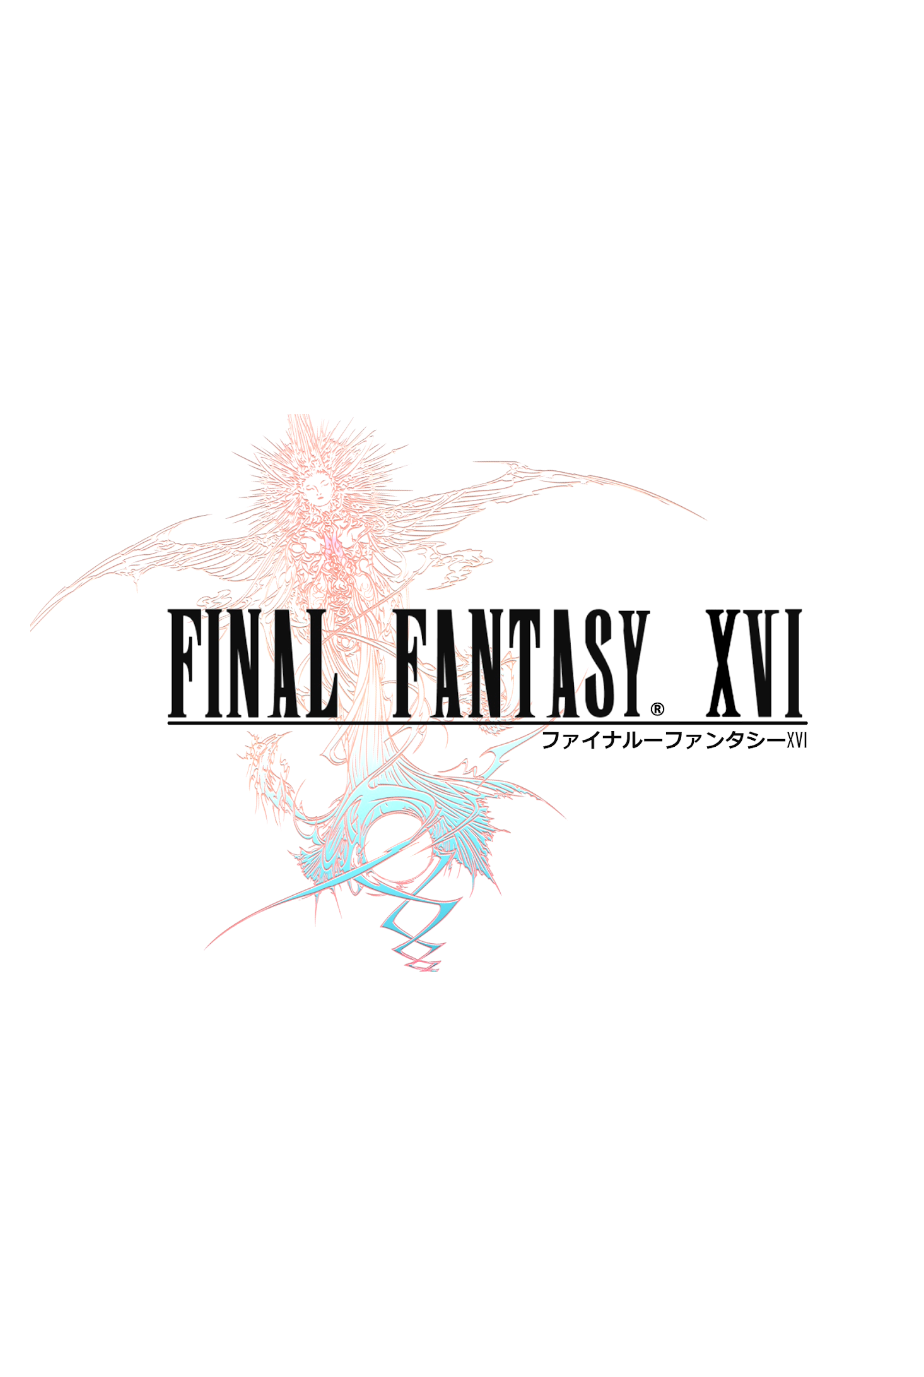 Final Fantasy XVI - Wikipedia